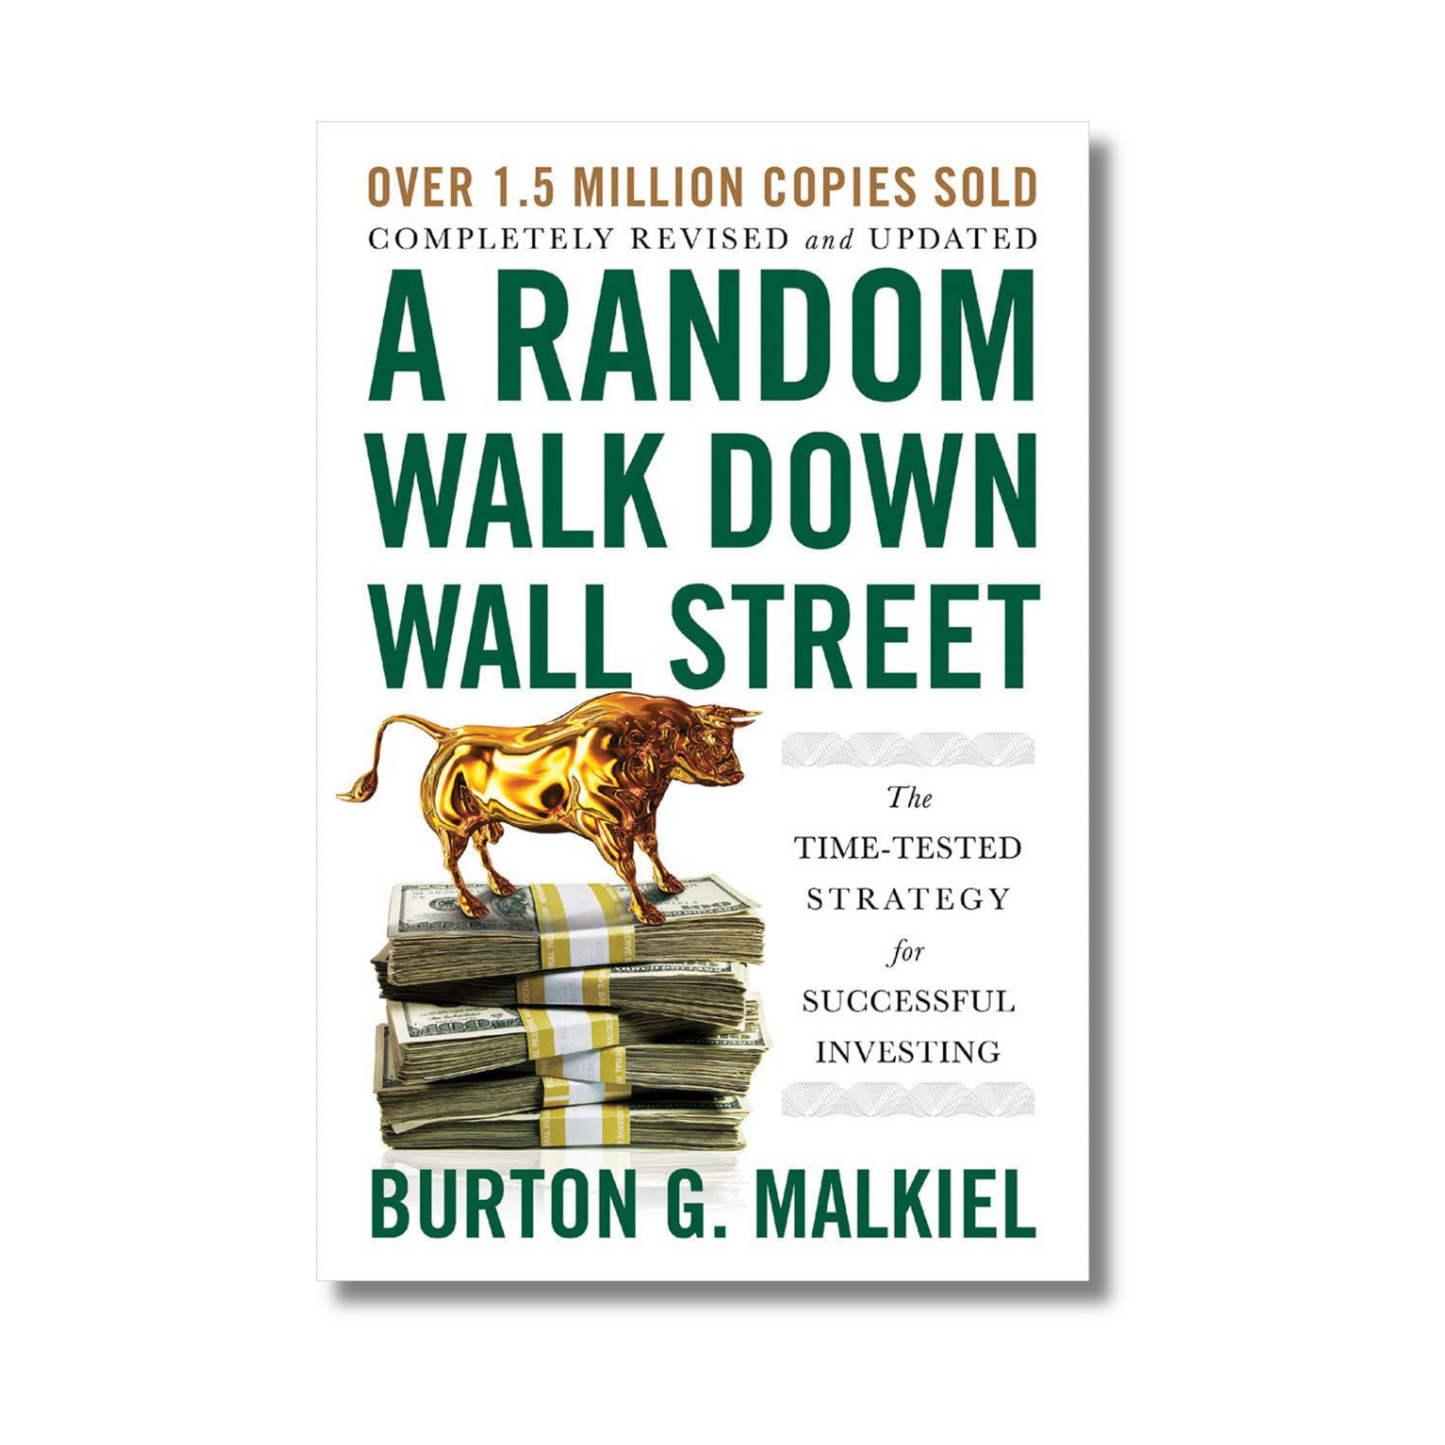 A Random Walk Down Wall Street By Burton G. Malkiel (Paperback)